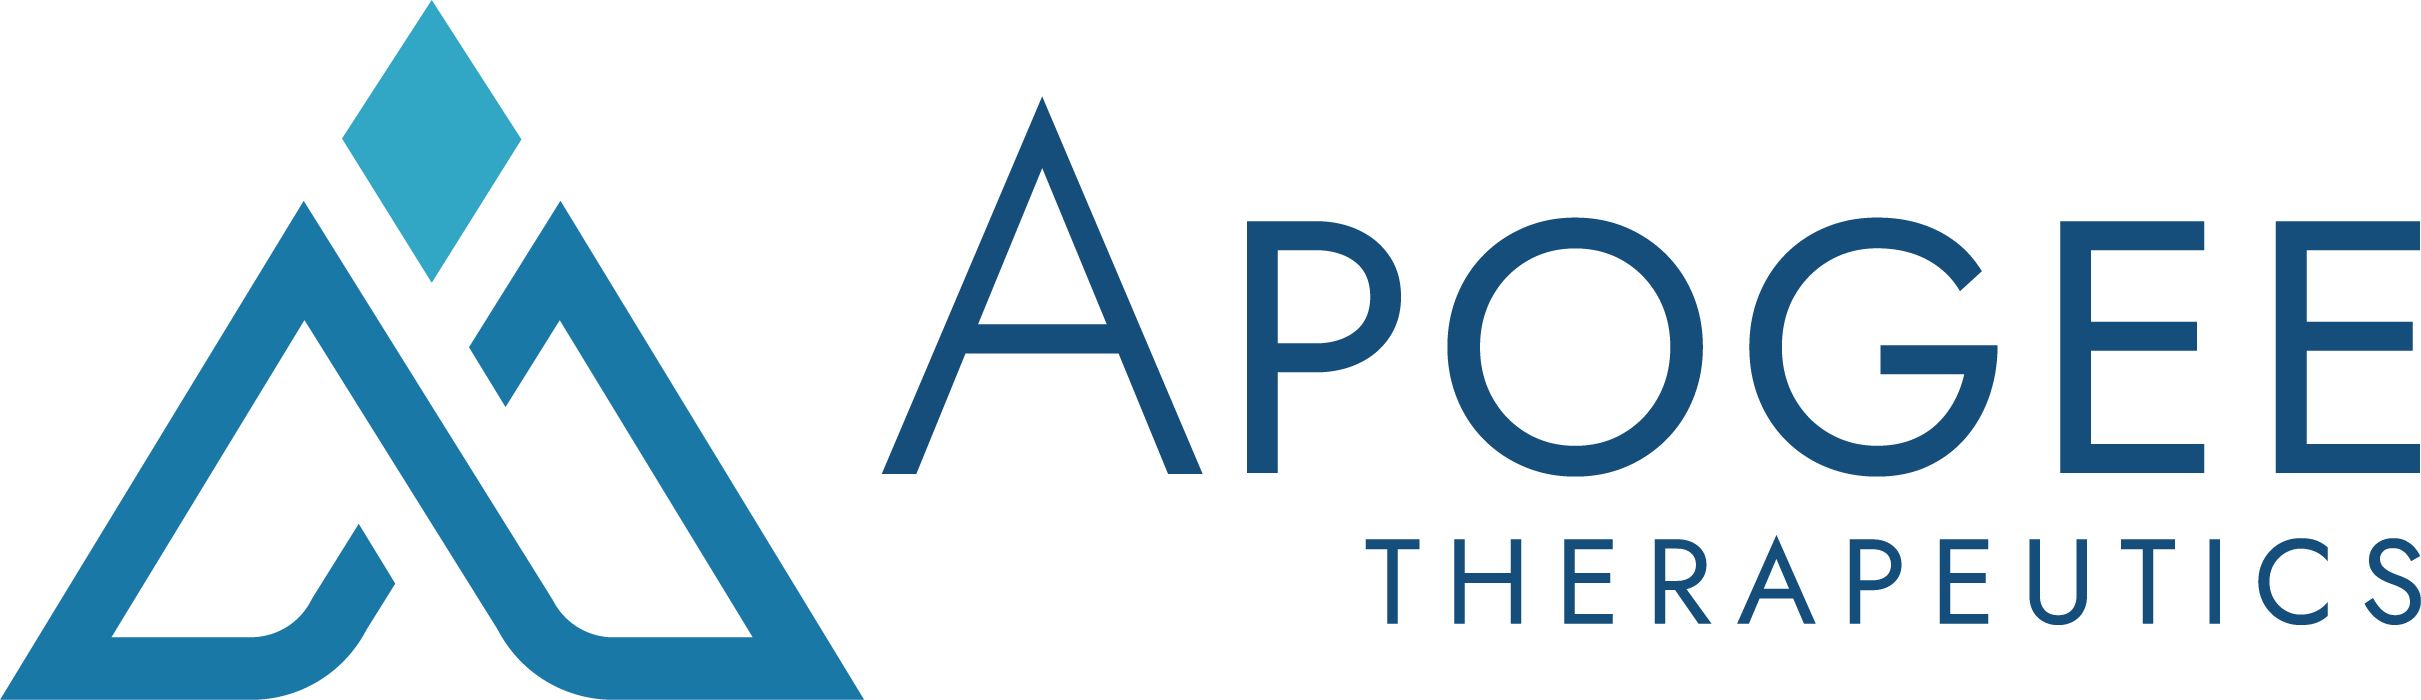 Apogee Therapeutics, Inc.